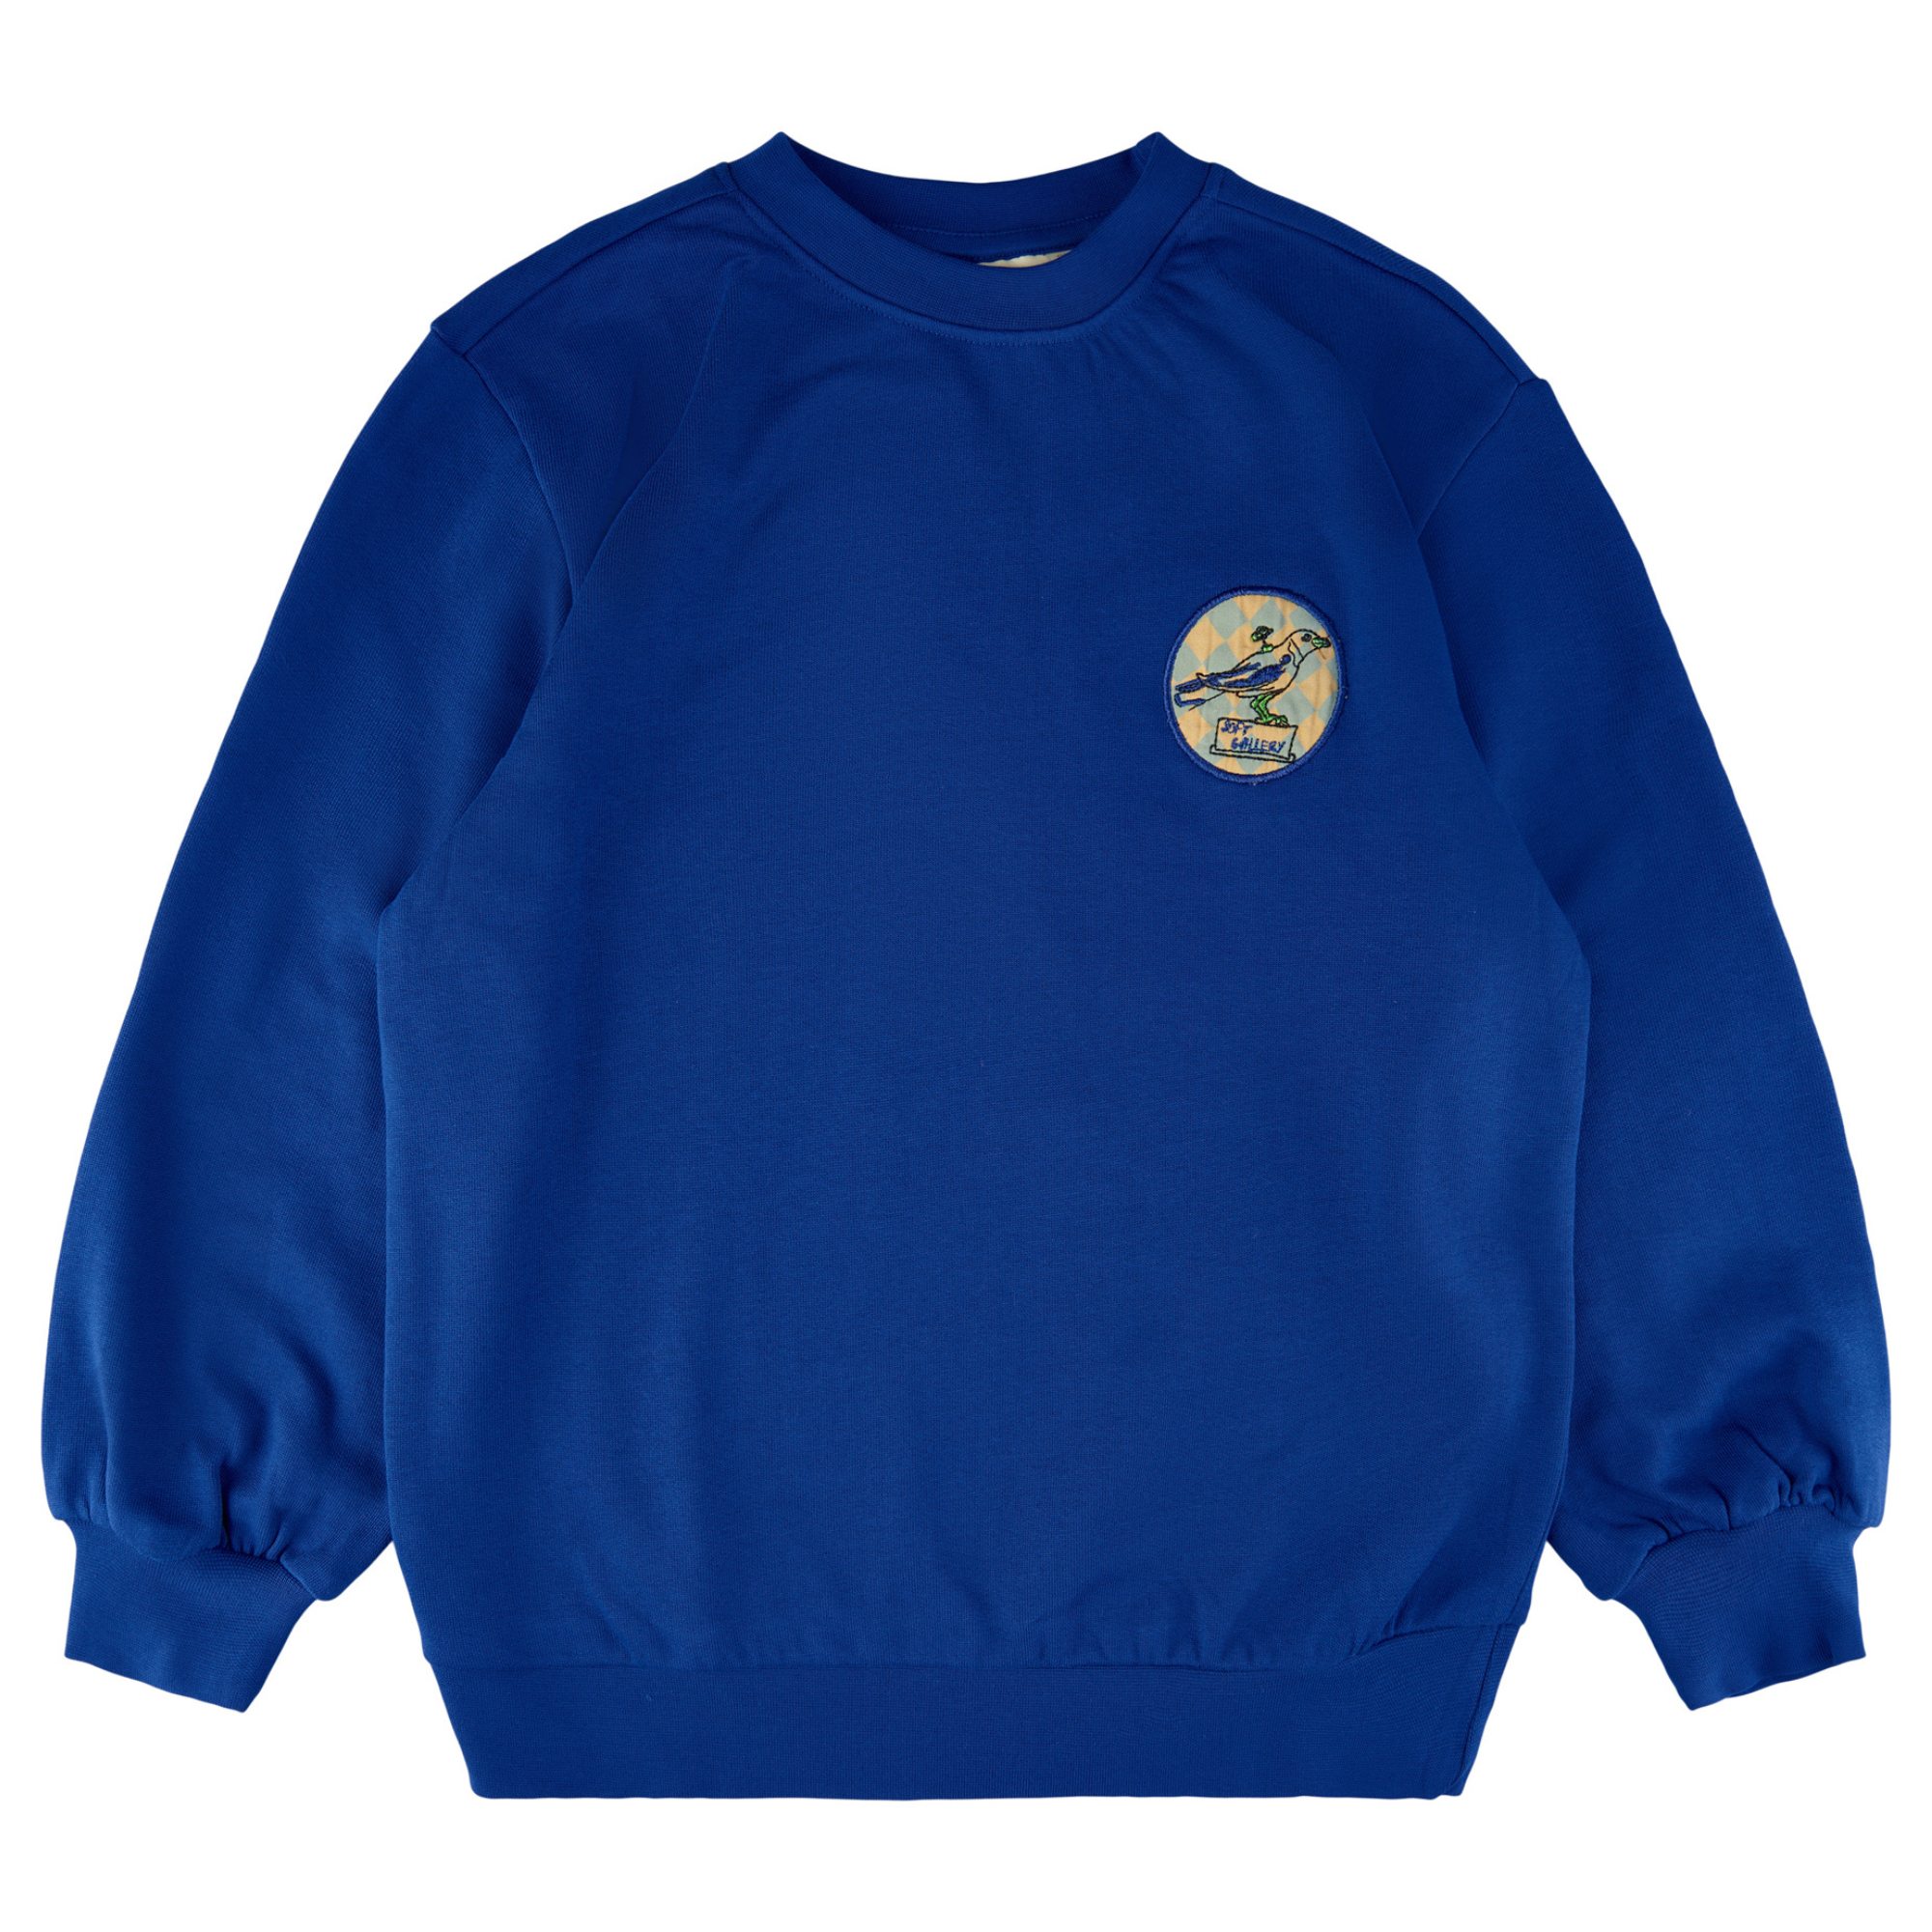 Soft Gallery - Konrad Block LS Sweatshirt, SG2356 - True Blue